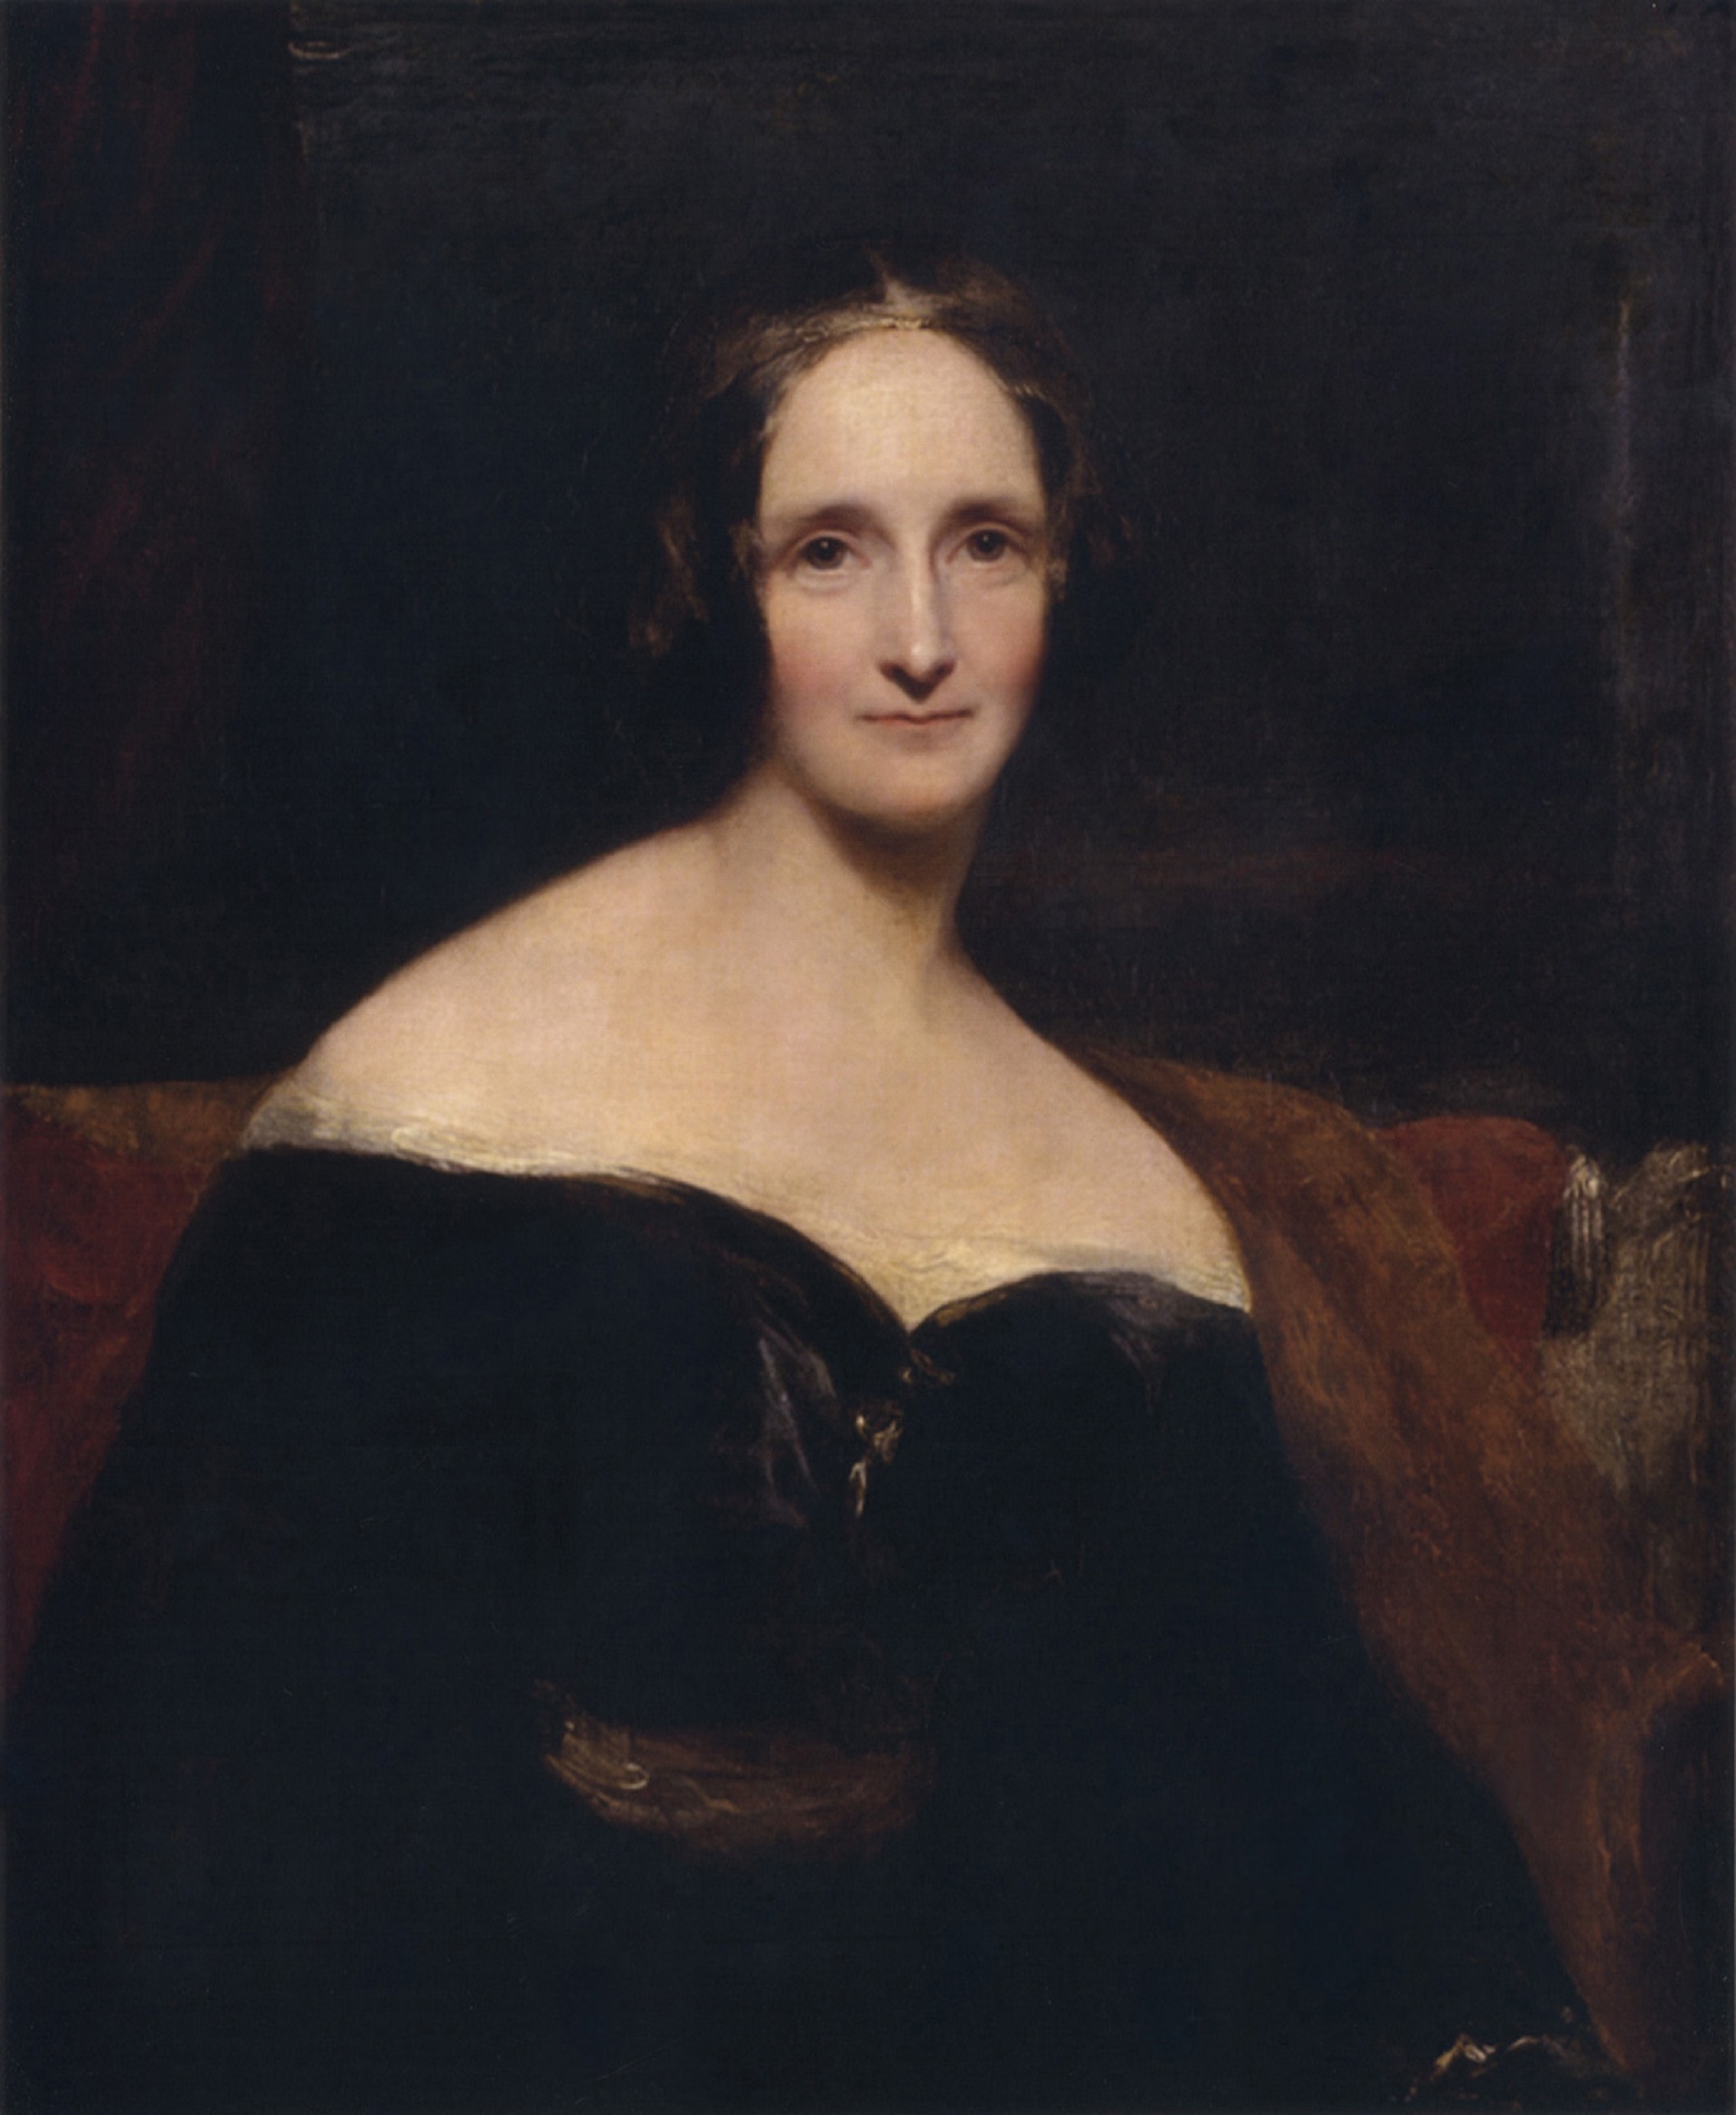 Mary Shelley, por Richard Rothwell, exhibido en la Royal Academy en 1840 (Wikipedia)